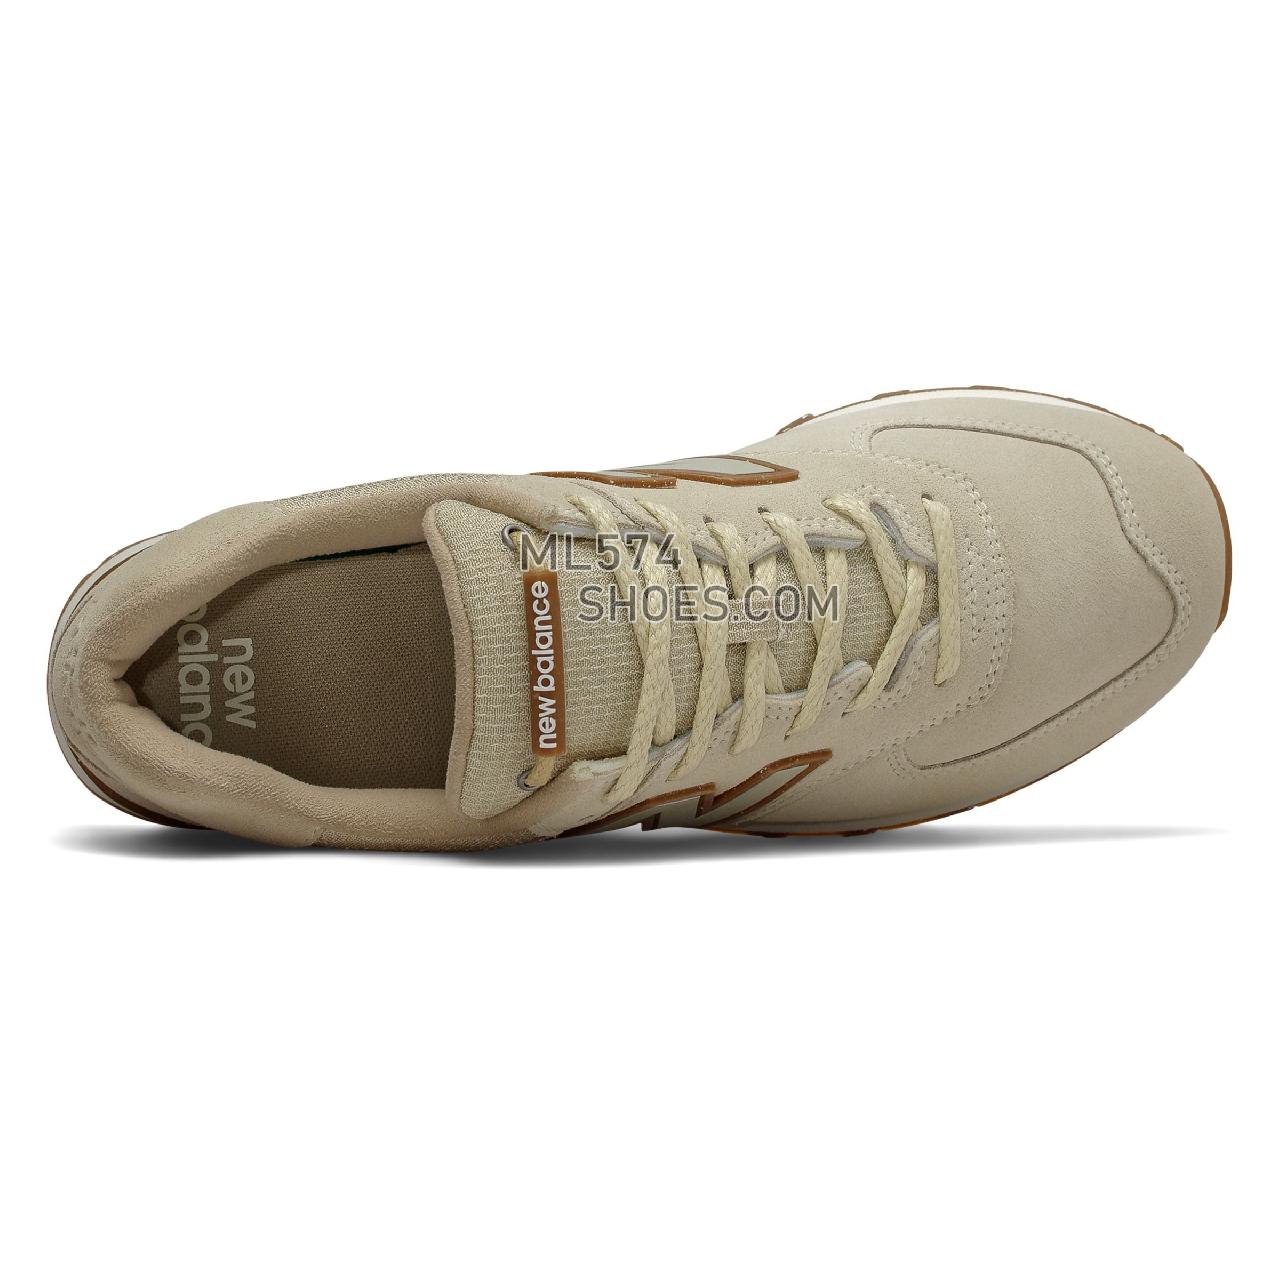 New Balance 574 Premium Outdoors - Men's Classic Sneakers - Bone with Turtle Dove - ML574SOK